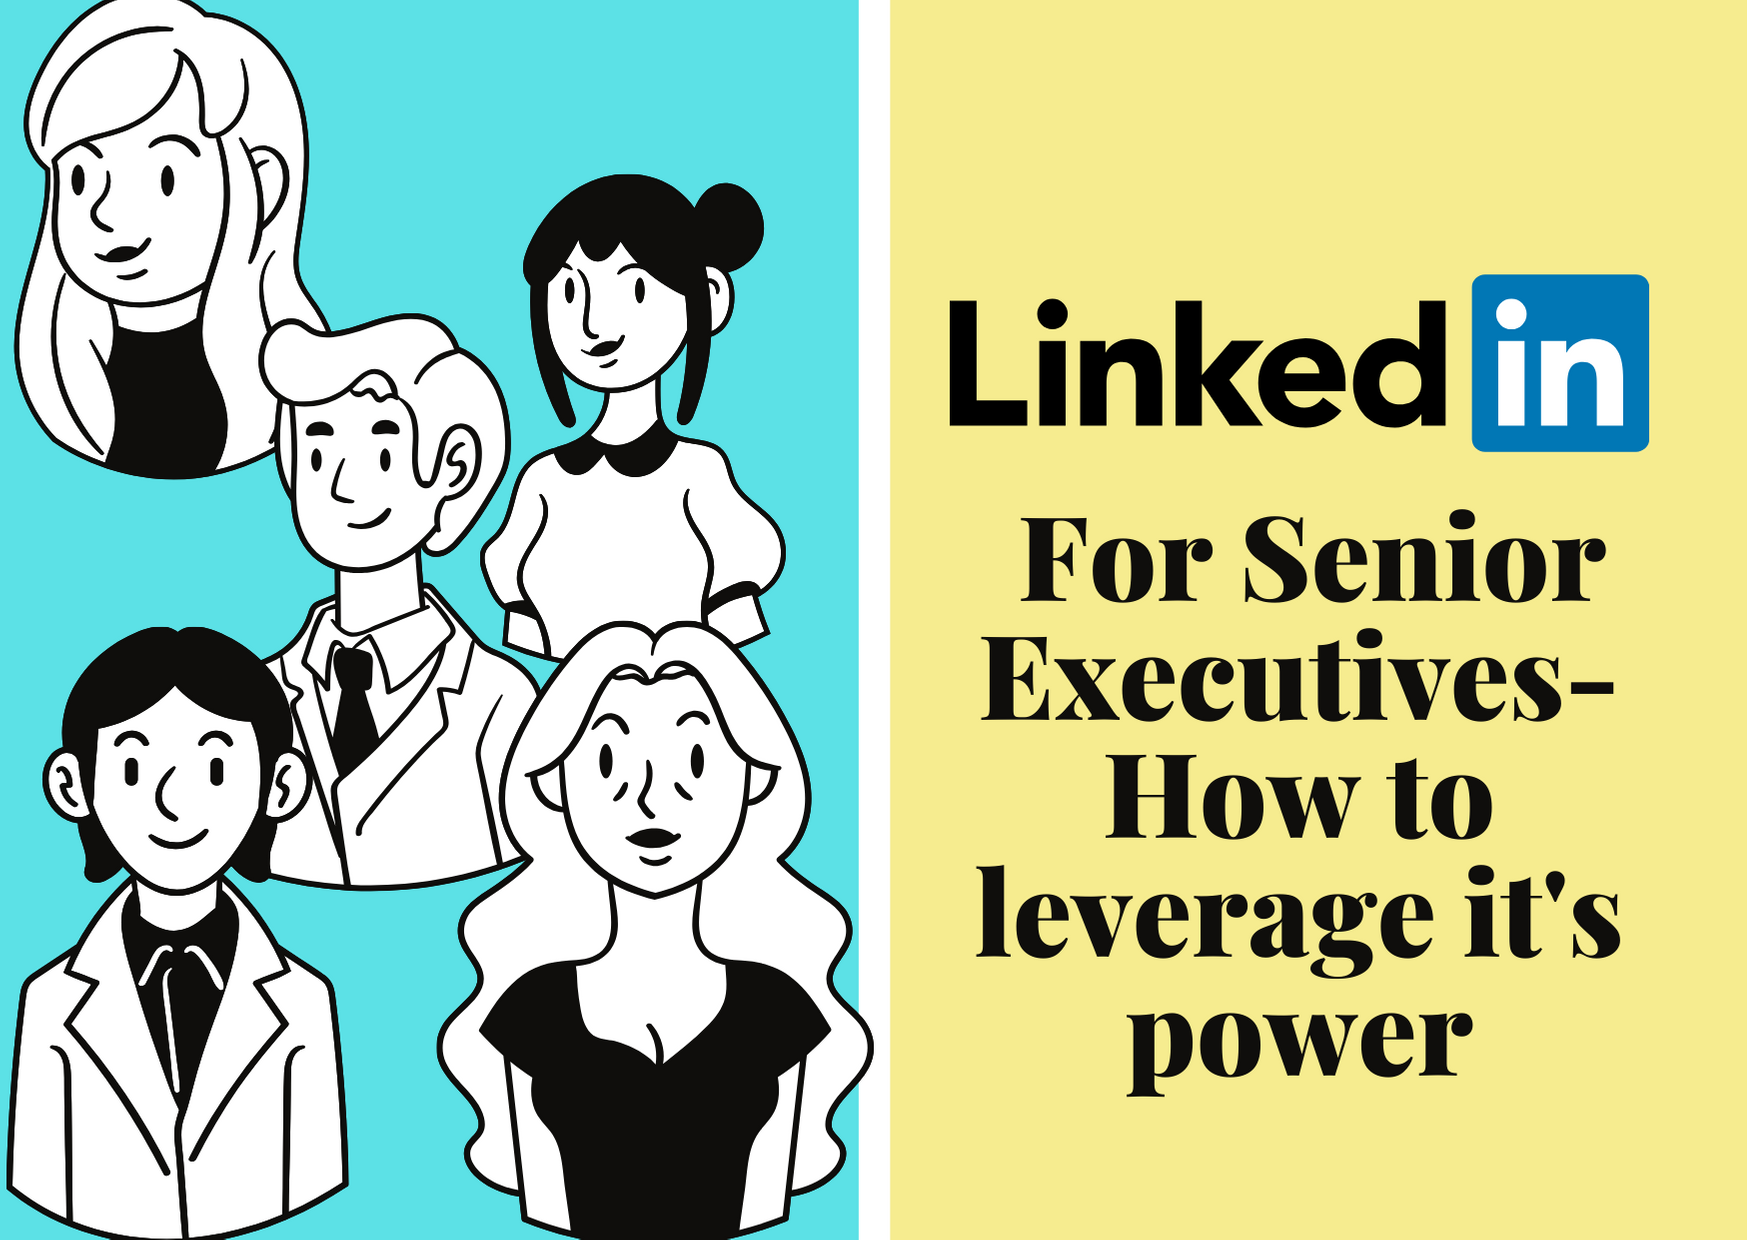 LinkedIn for Senior Executives: How to leverage power of LinkedIn?